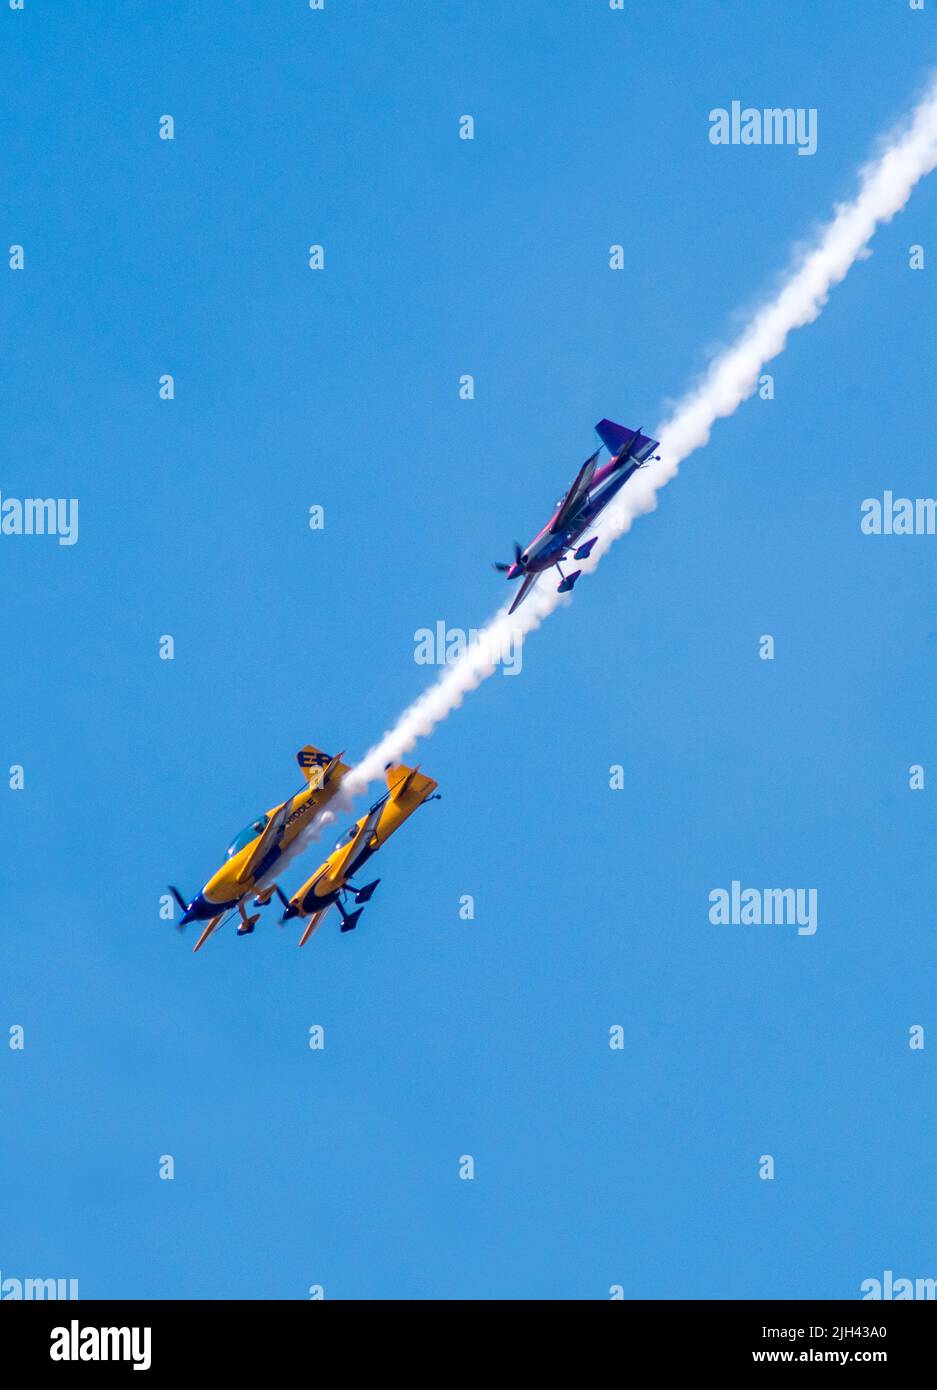 July 11 2019 Battle creek Michigan USA; three planes in a deep dive perform at an air show in Battle Creek Michigan USA Stock Photo